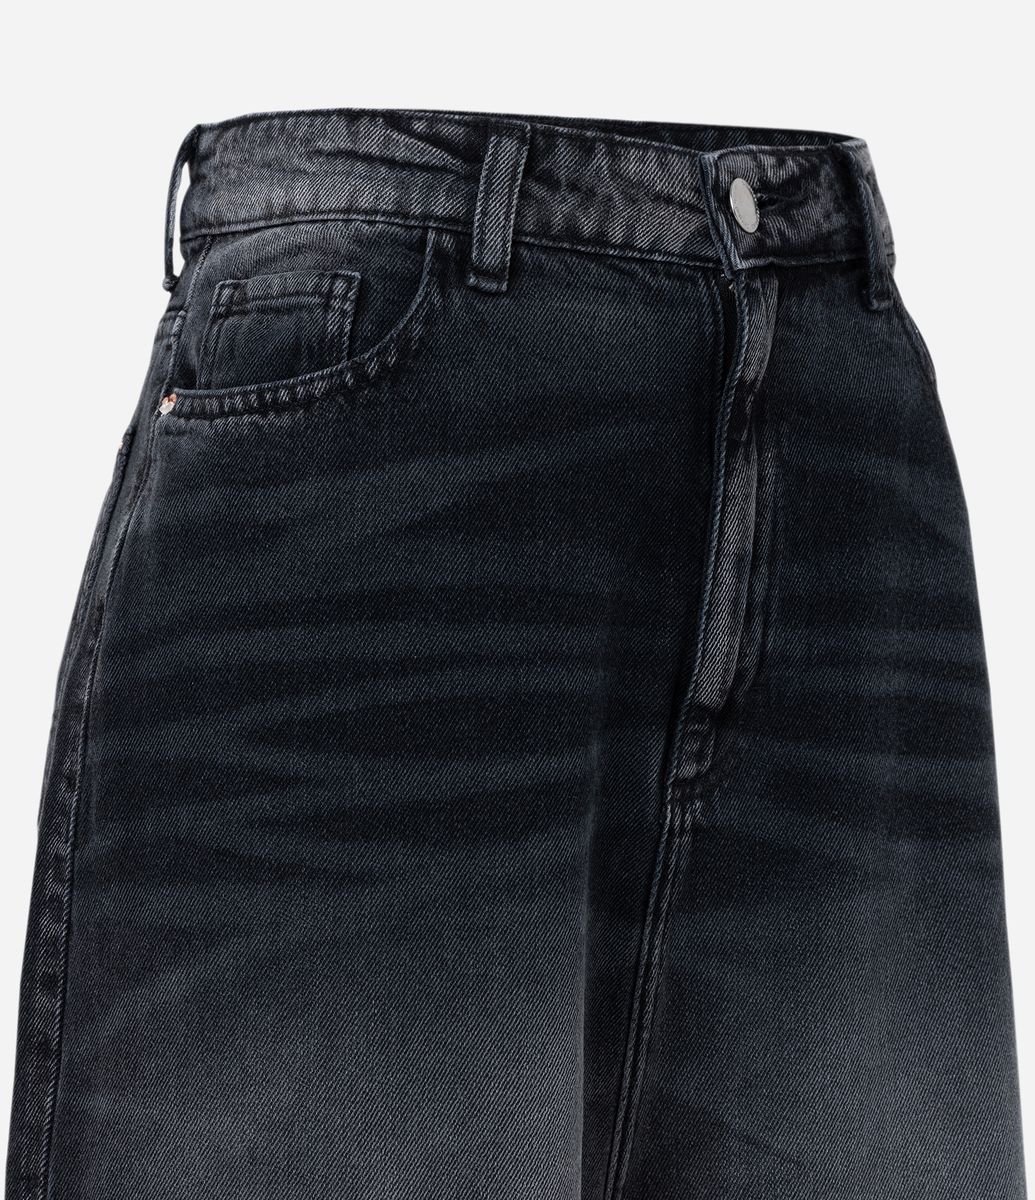 Calça jeans pantalona preto - Stop jeans - Outros Moda e Acessórios -  Magazine Luiza